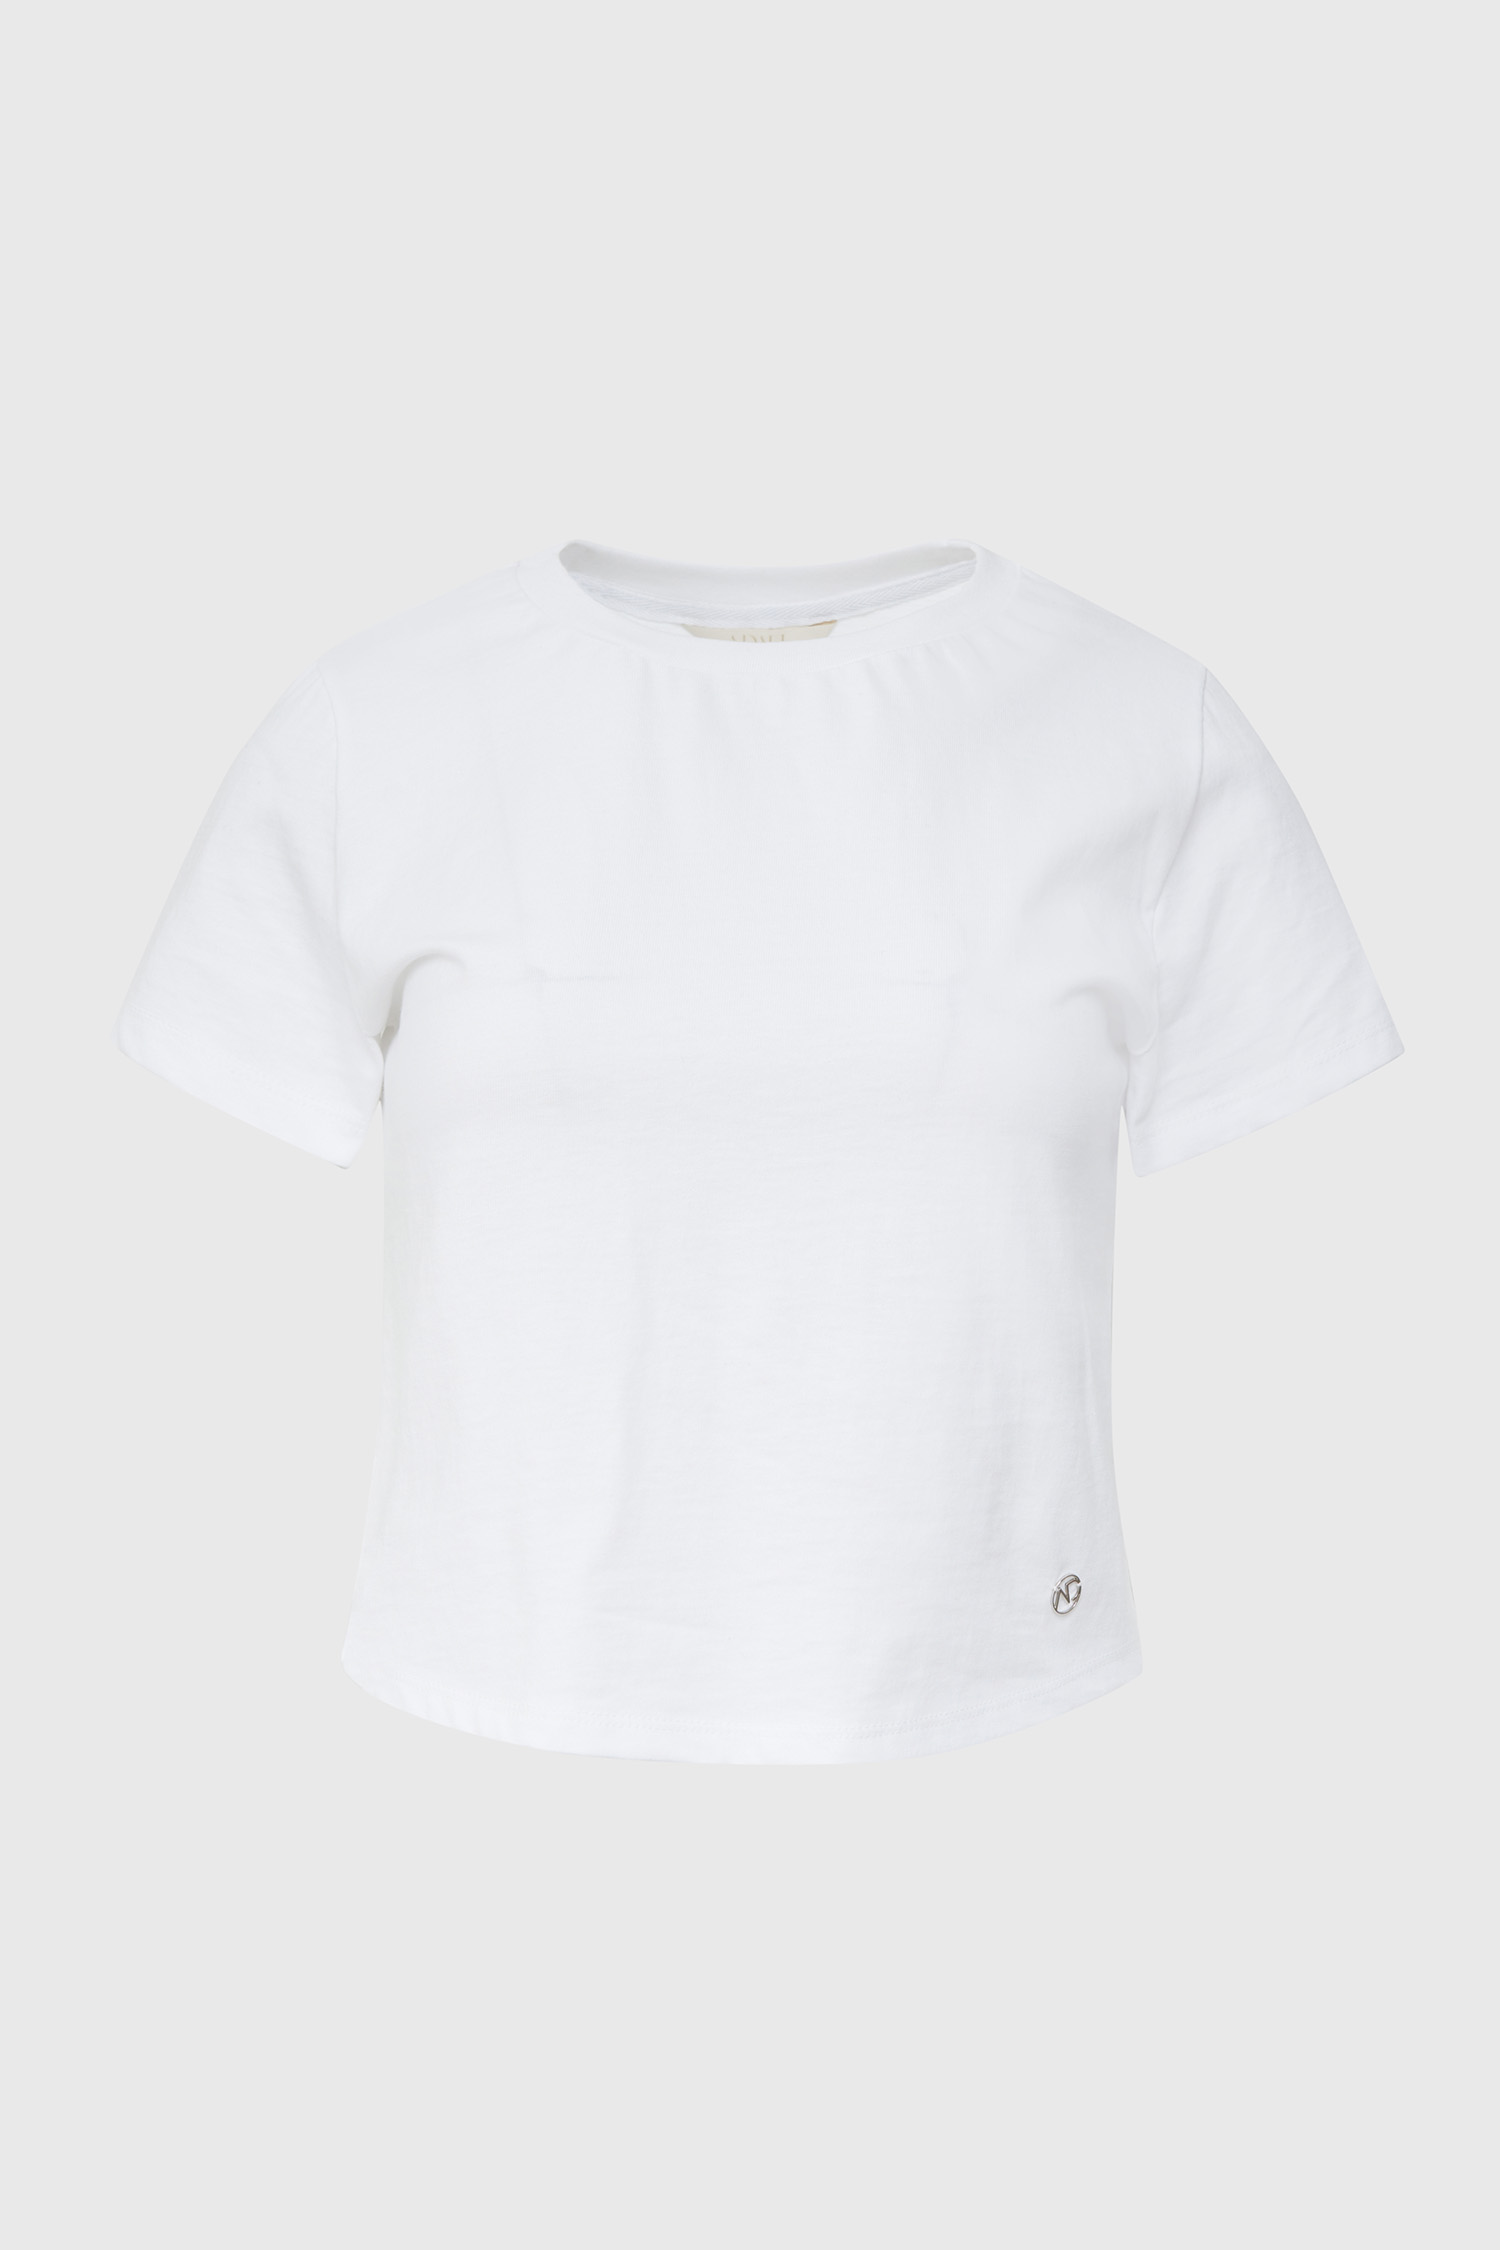 Basic AD silver point t shirt - white